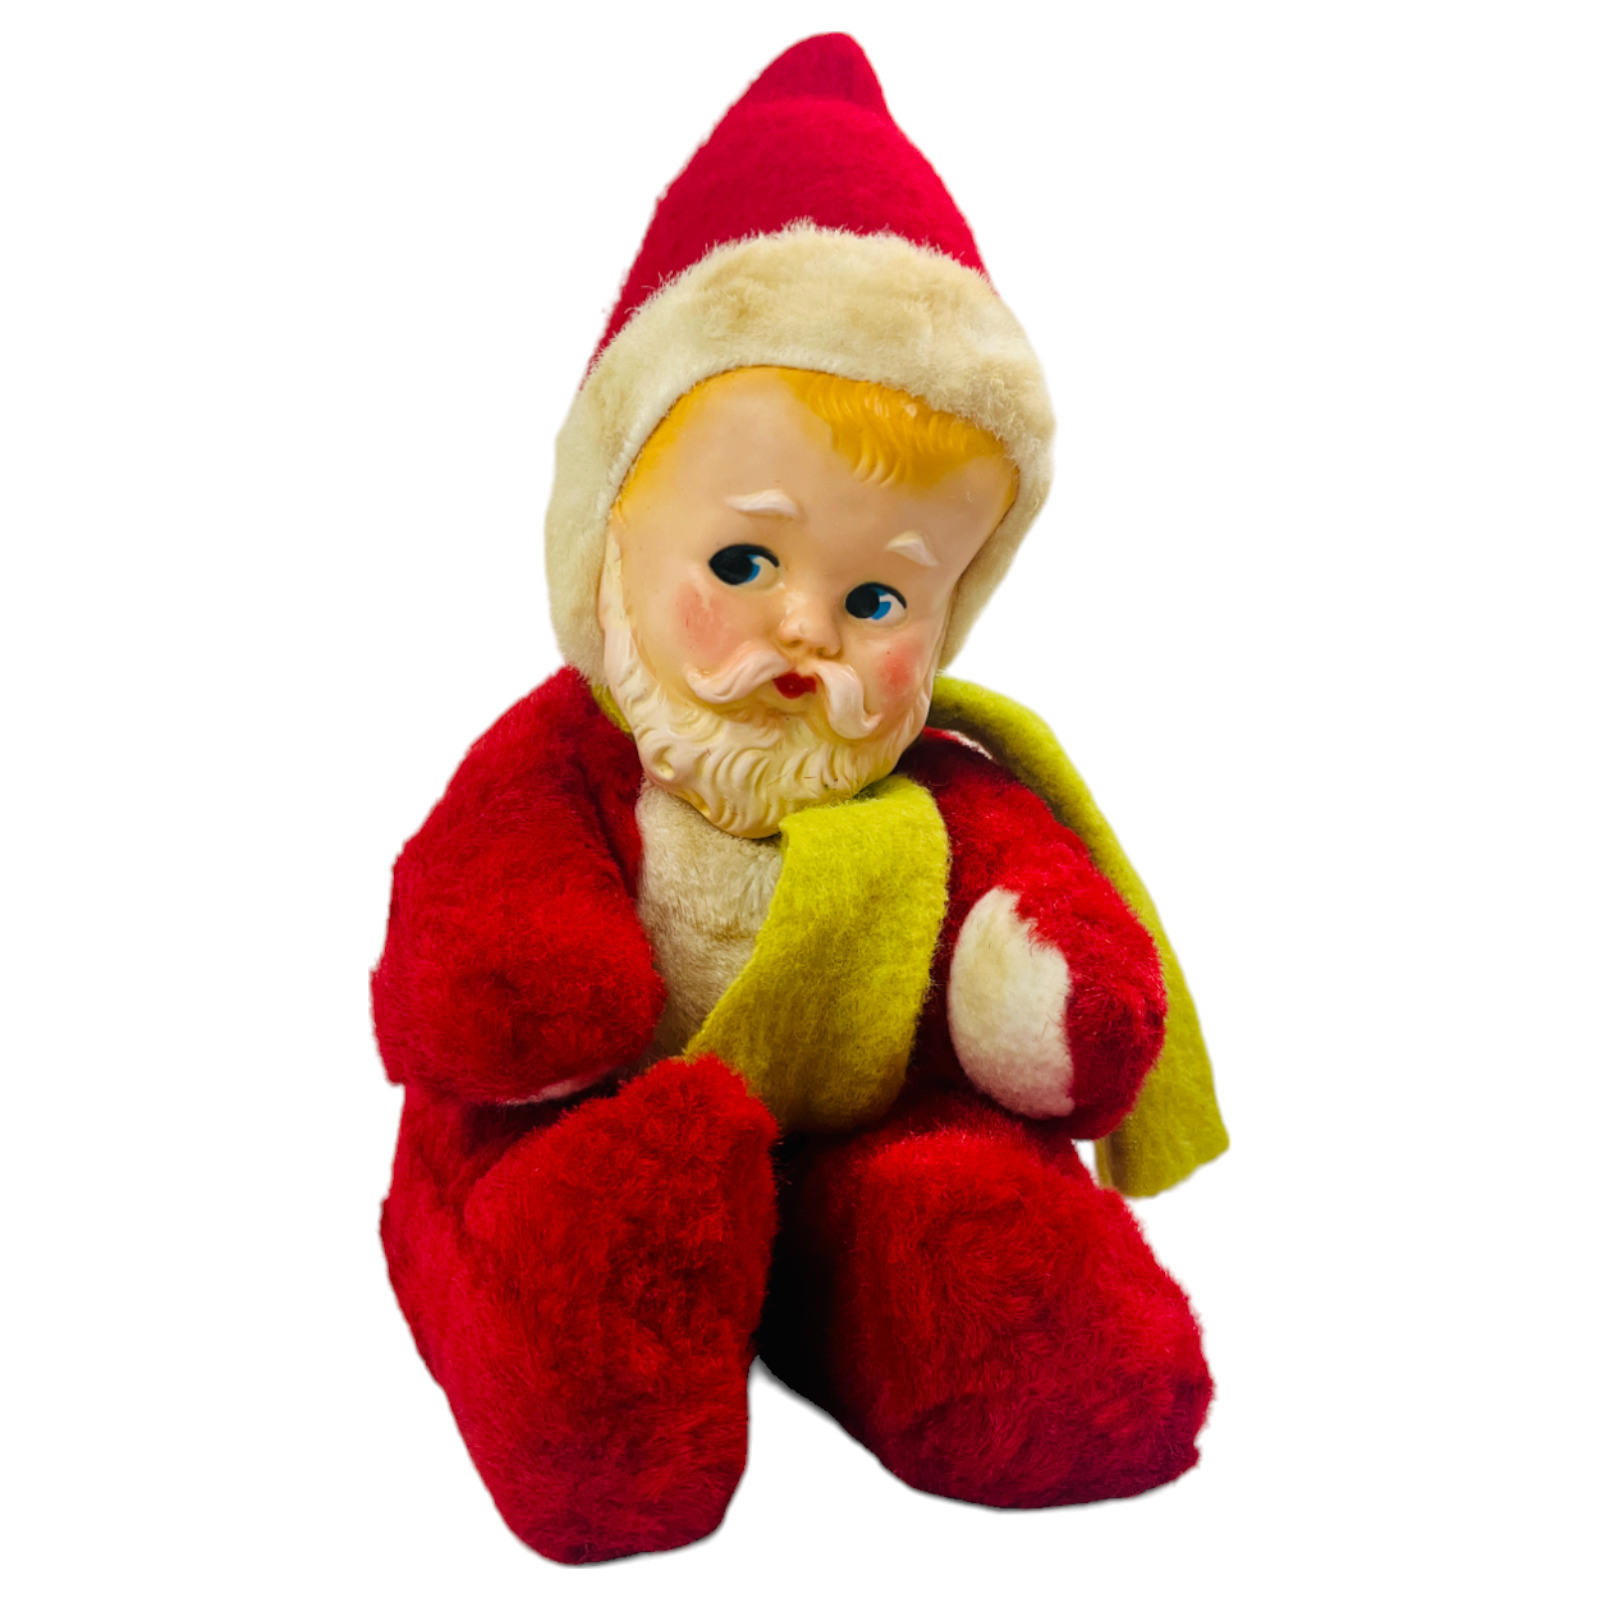 Vintage Knickerbocker Rubber Face Baby Santa Plush Christmas Toy Green Scarf HTF